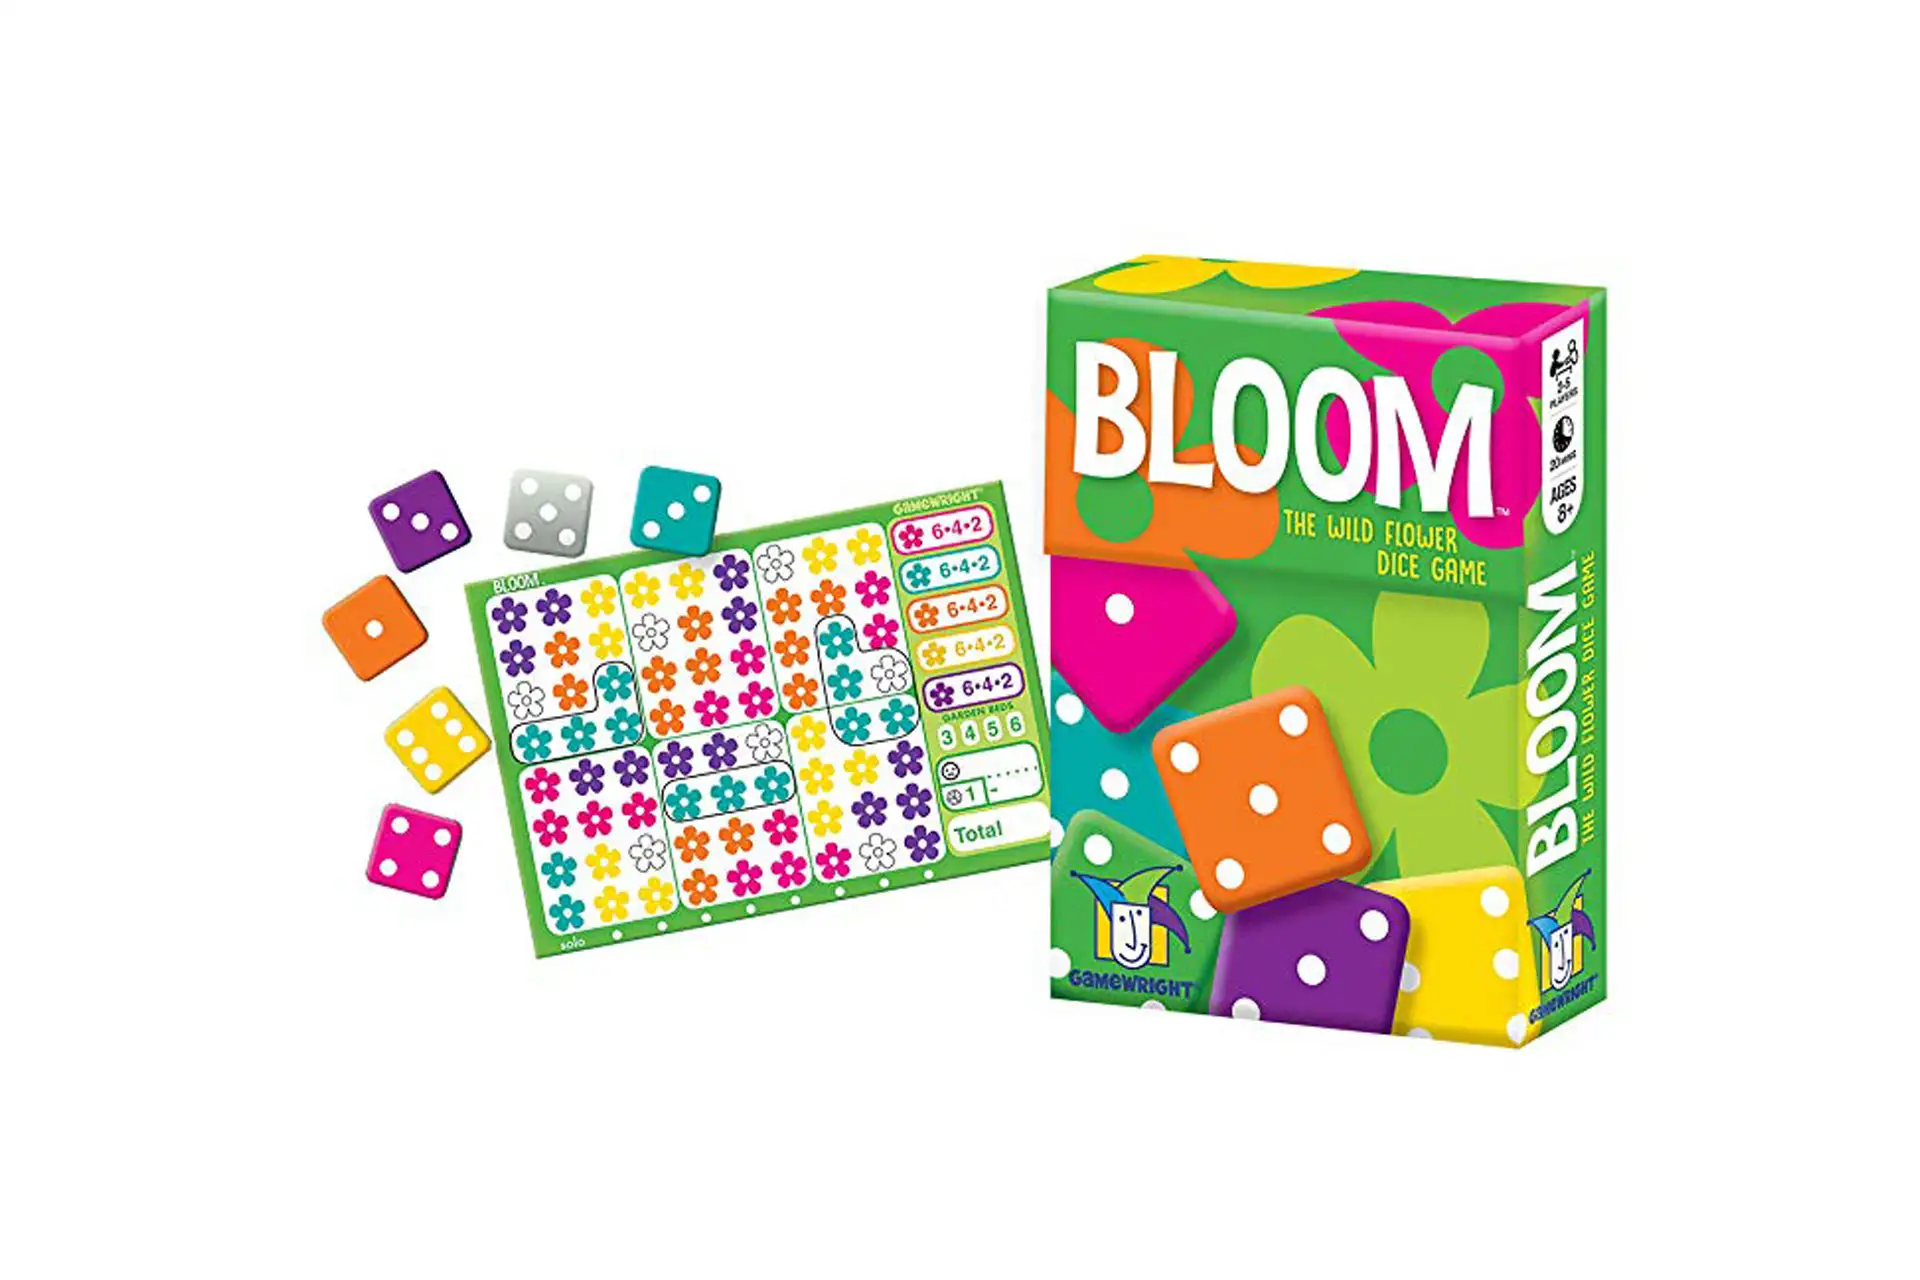 Bloom Travel Game; Courtesy of Amazon